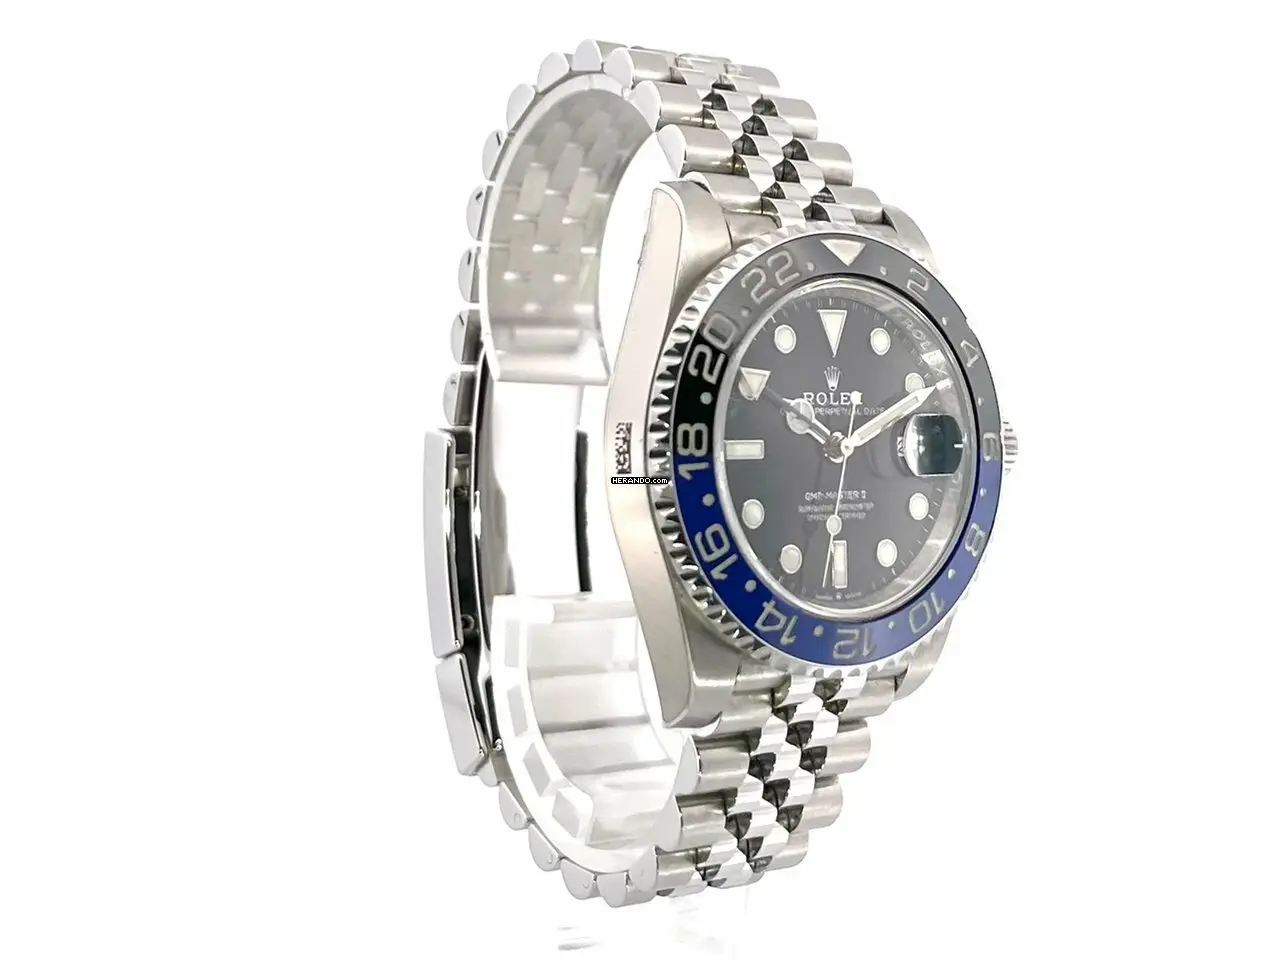 watches-328363-28410178-nplp6a1o3c72o2v9yf4ya3fa-ExtraLarge.webp